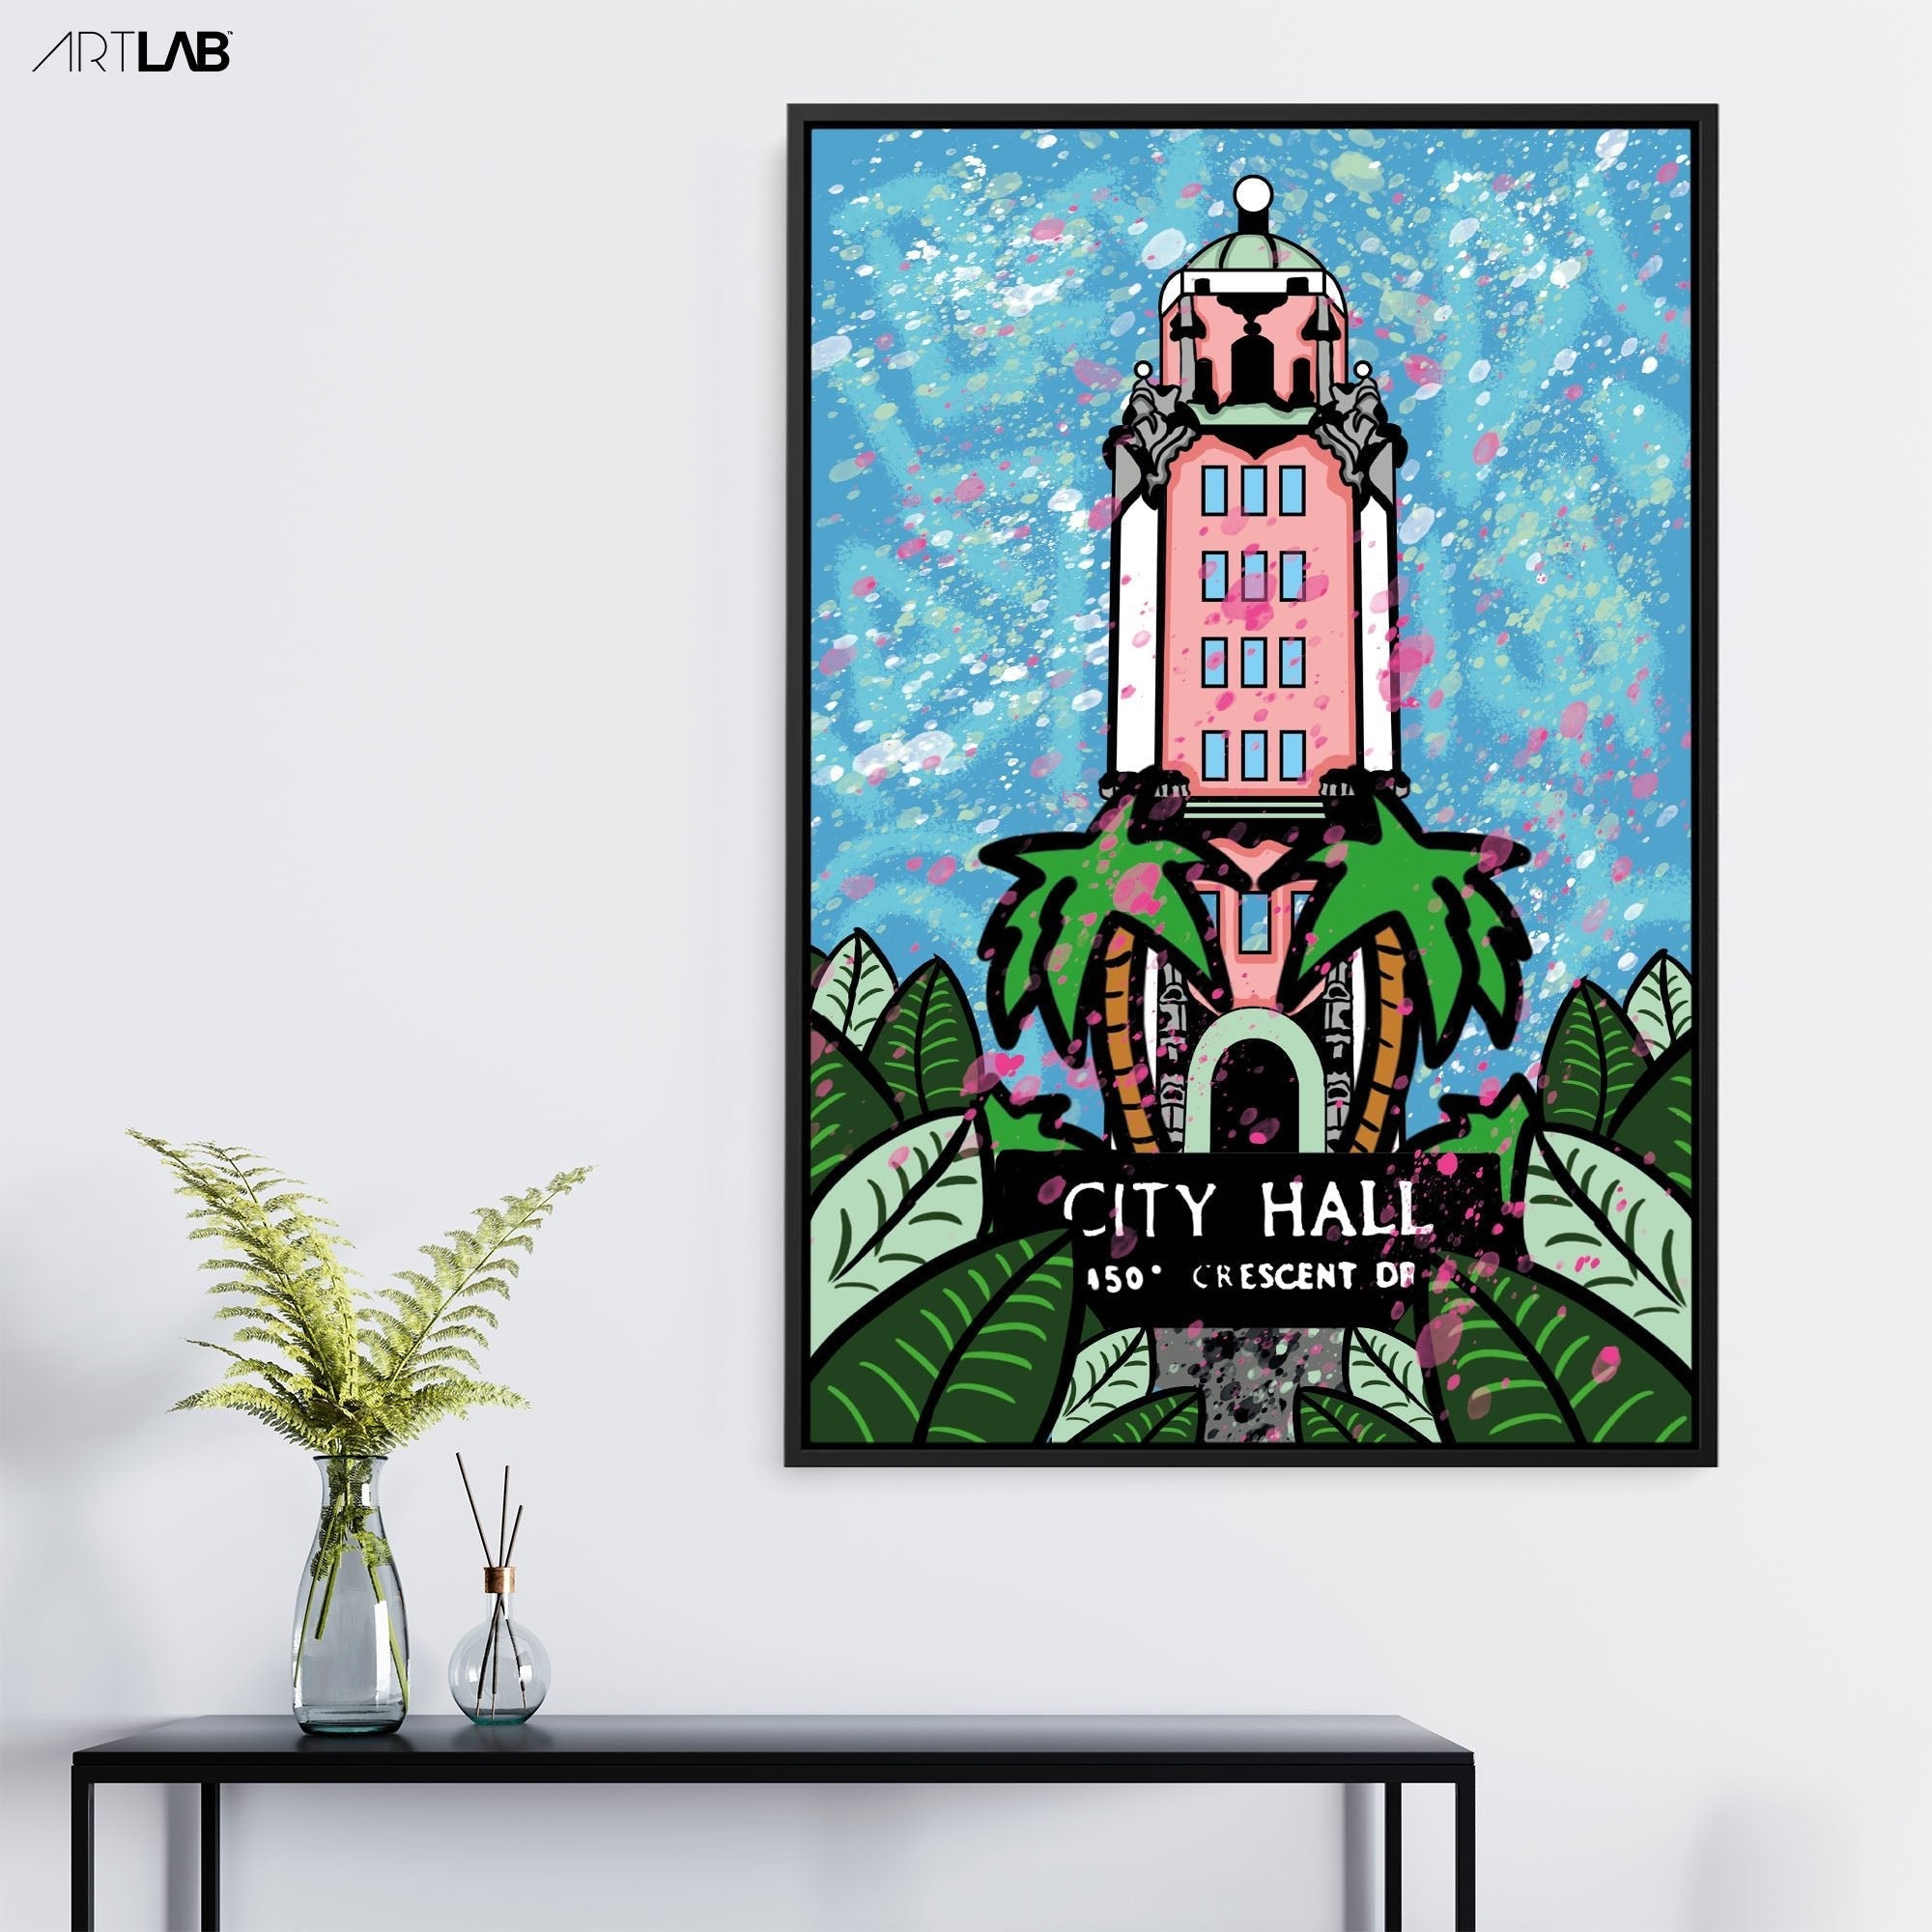 Bevery Hills: City Hall